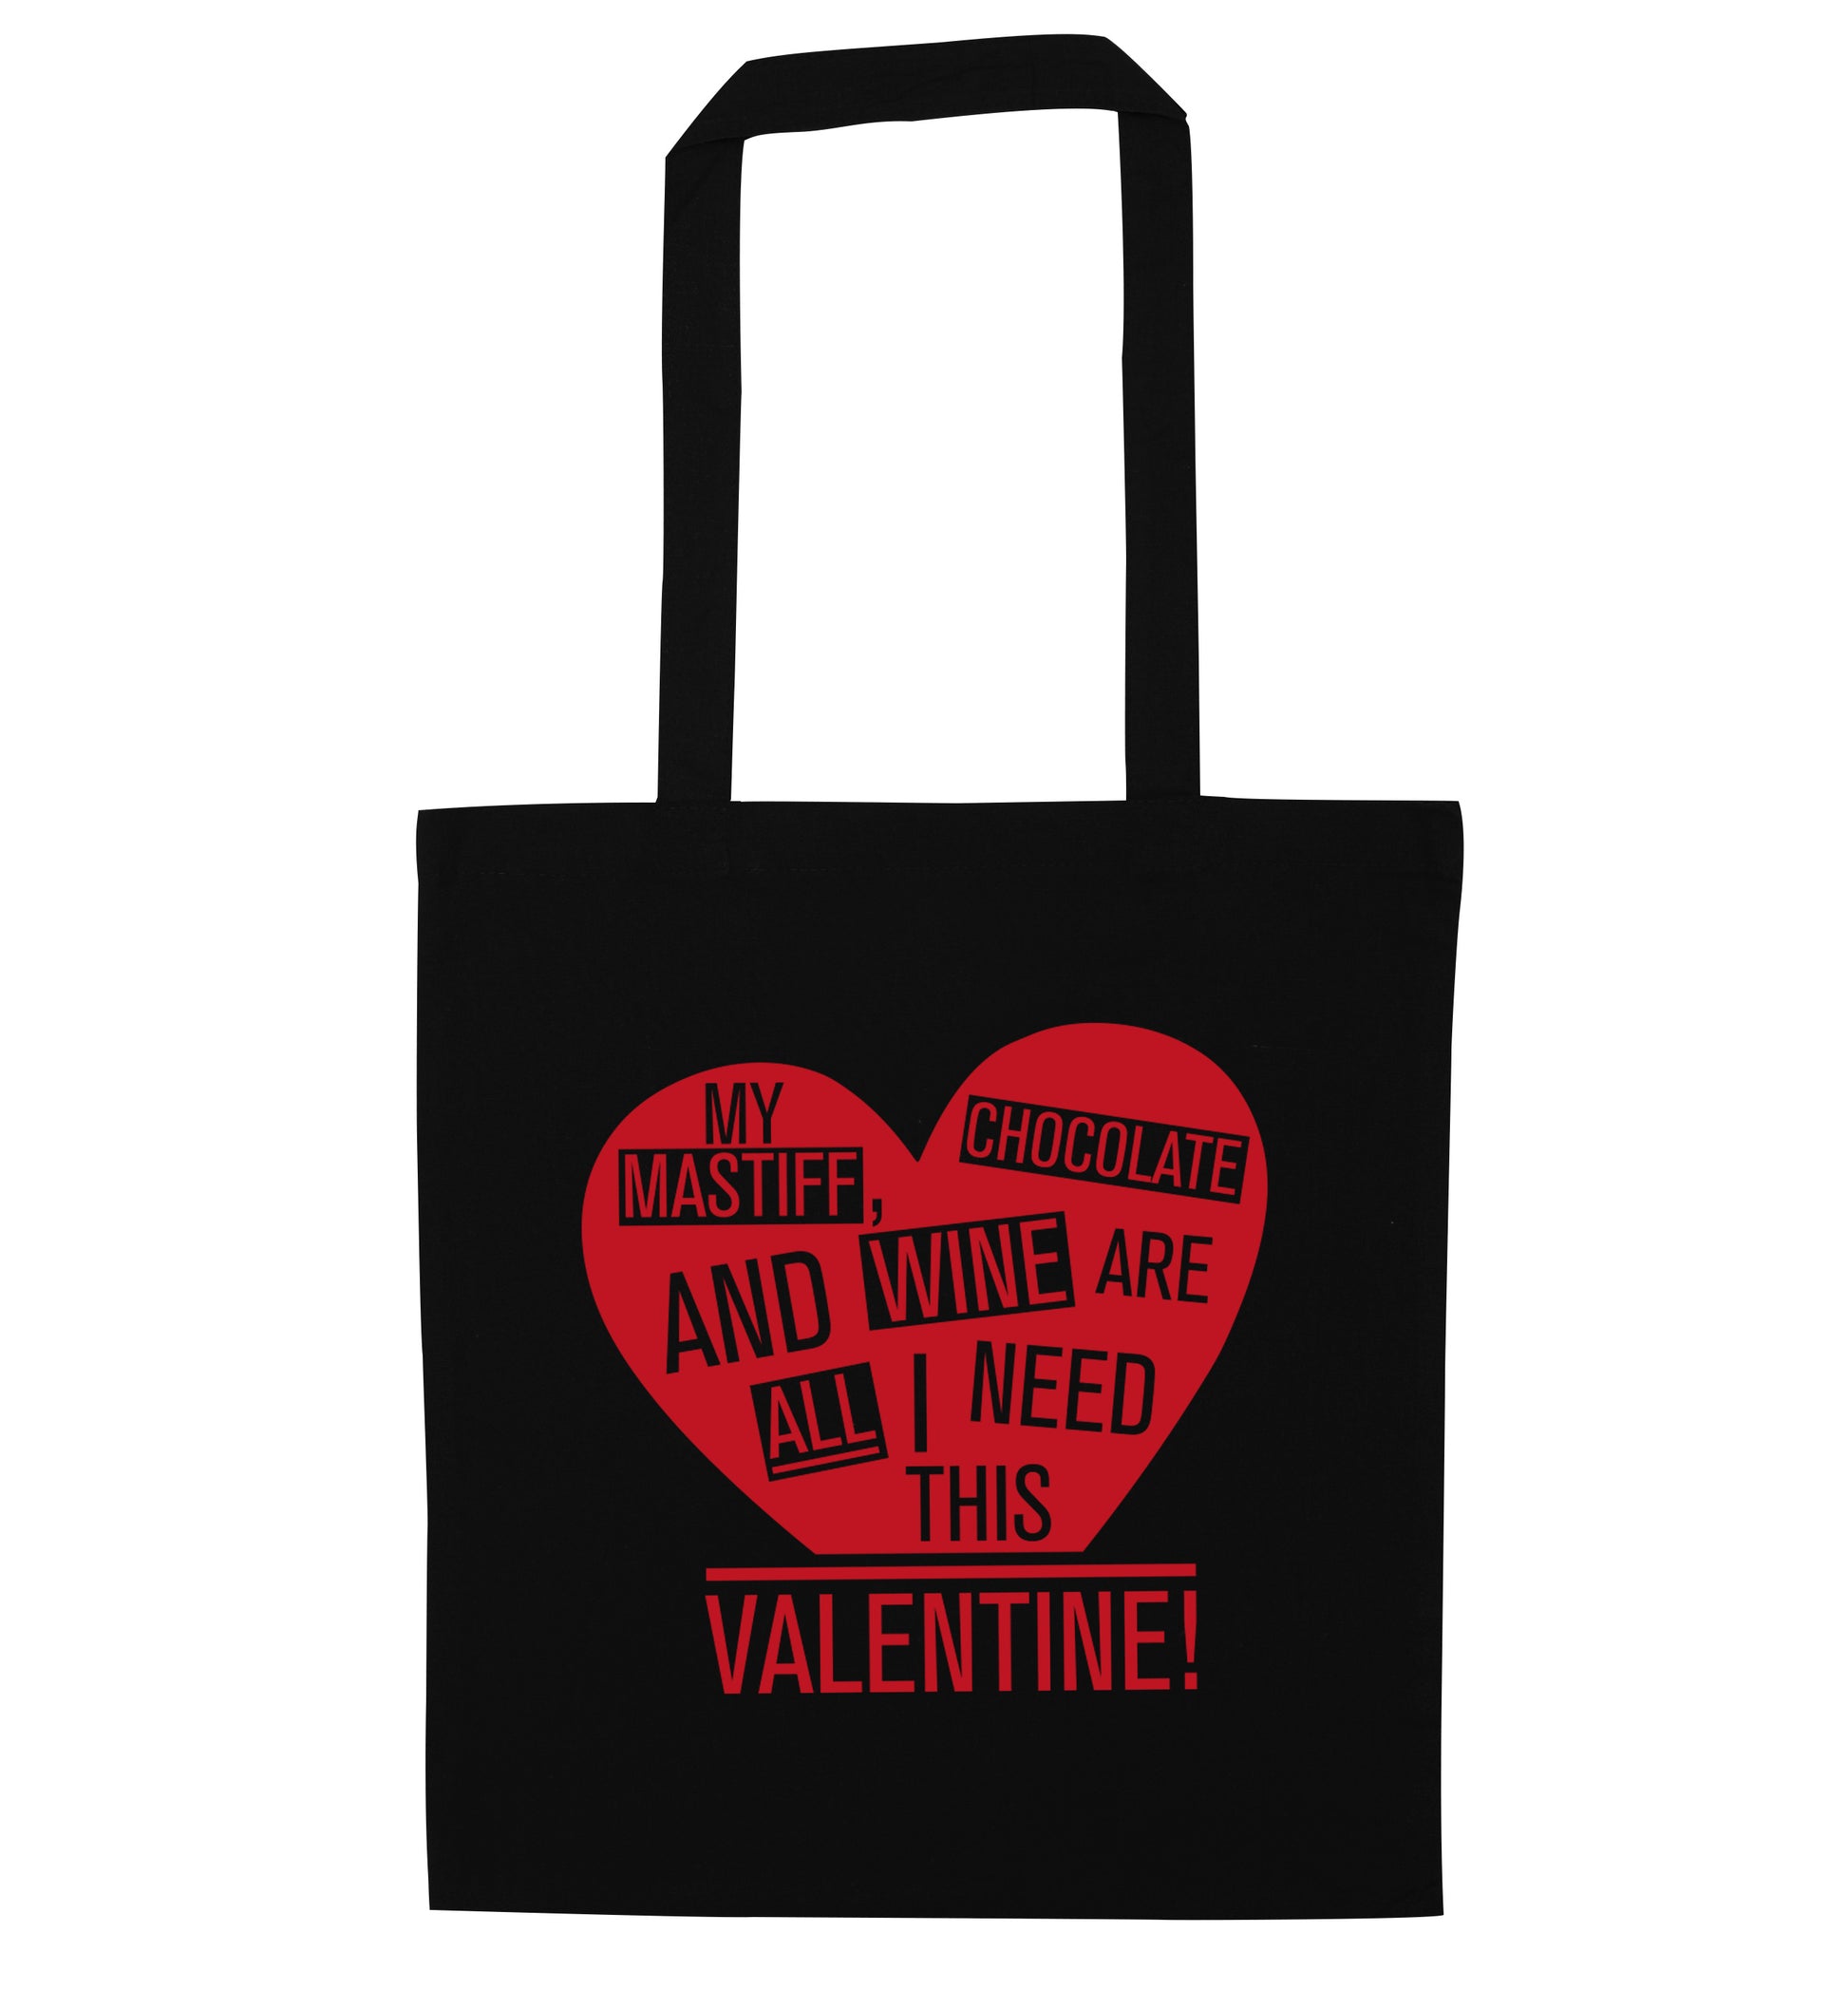 My mastiff, chocolate and wine are all I need this valentine! black tote bag